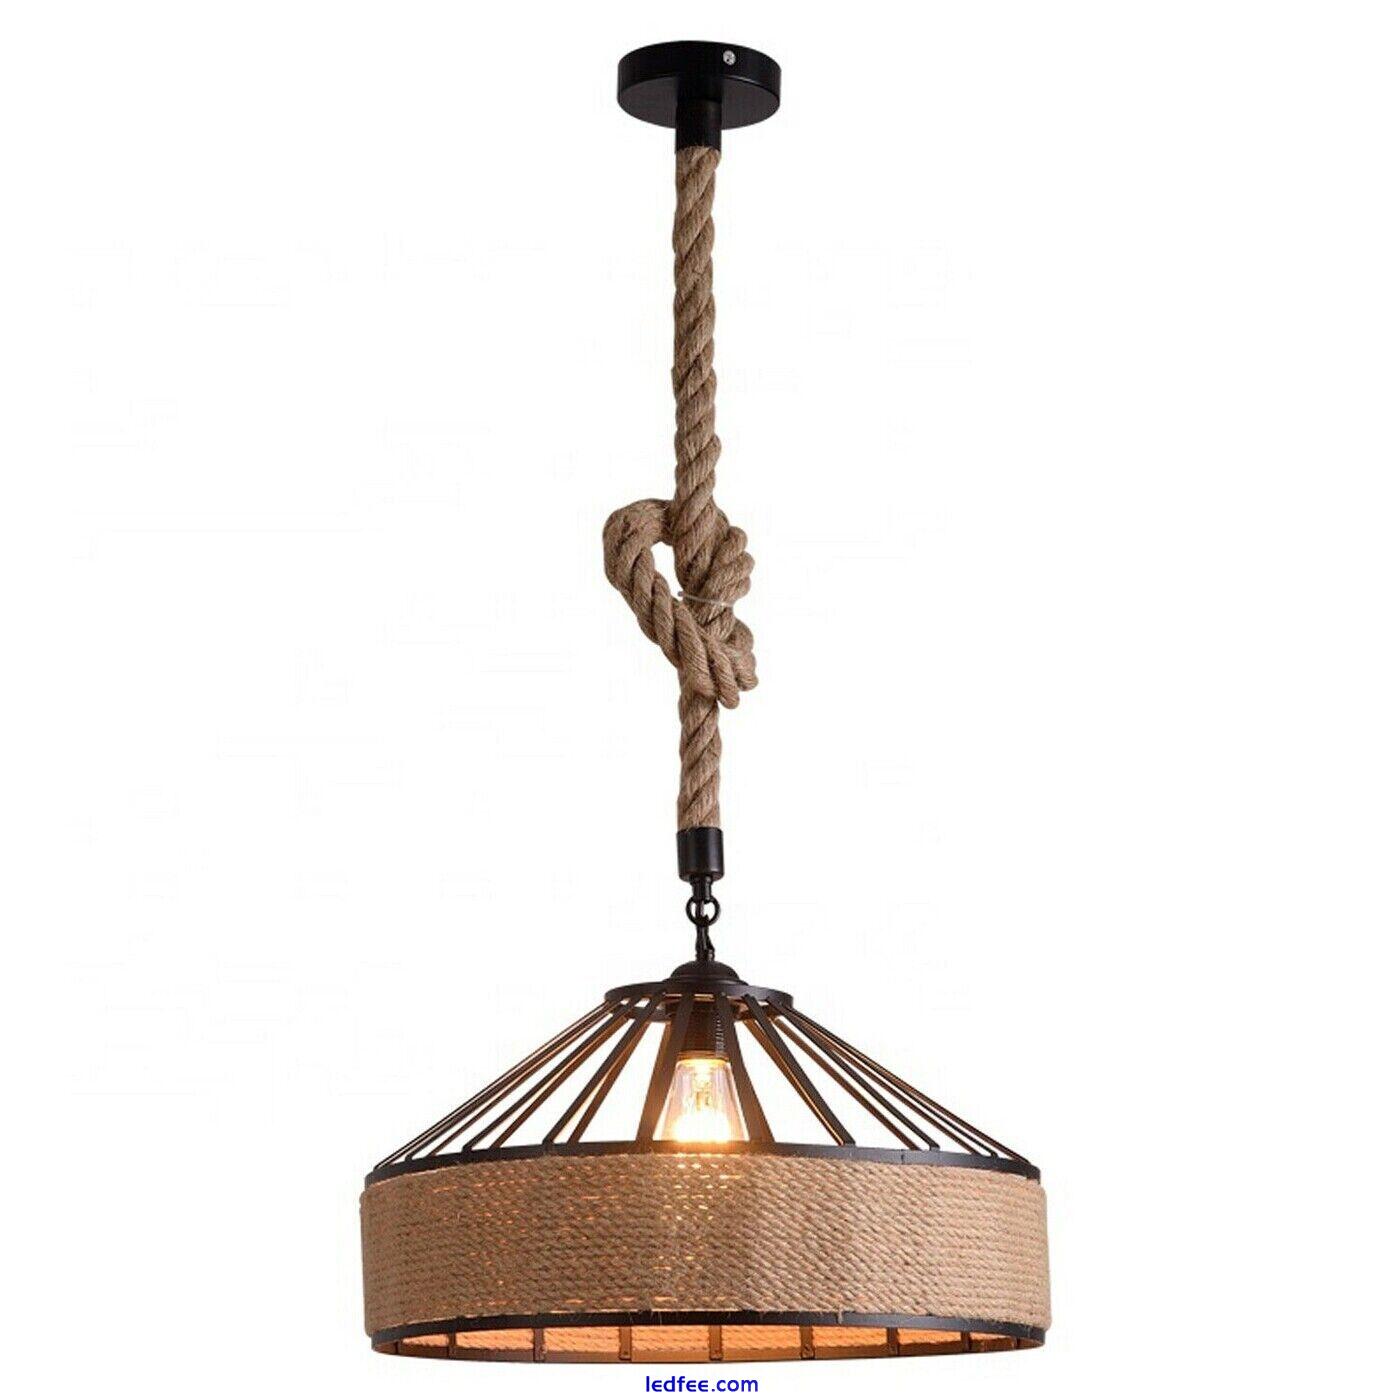 Vintage Industrial Ceiling Light Loft Hemp Rope Pendant Light Retro Lamp Iron UK 2 